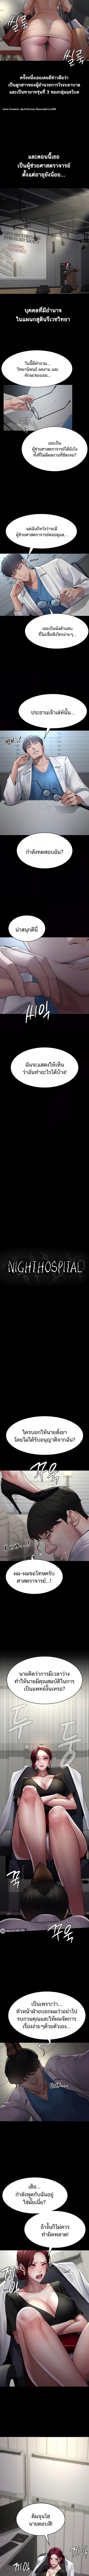 Night Hospital 33 2